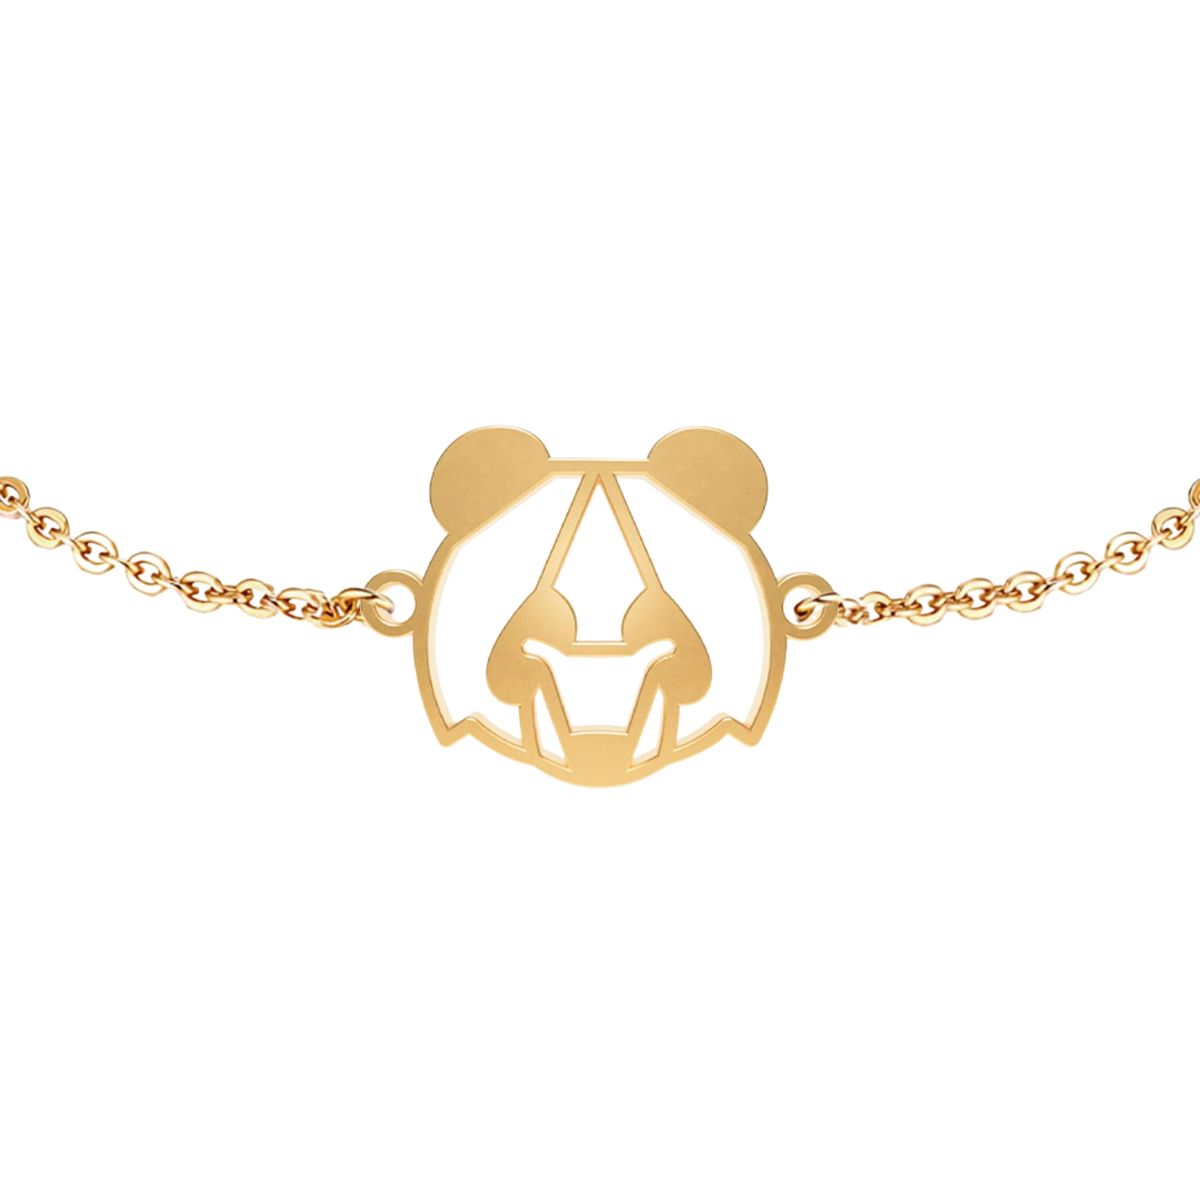 Bracelet Panda Gold - Armkette